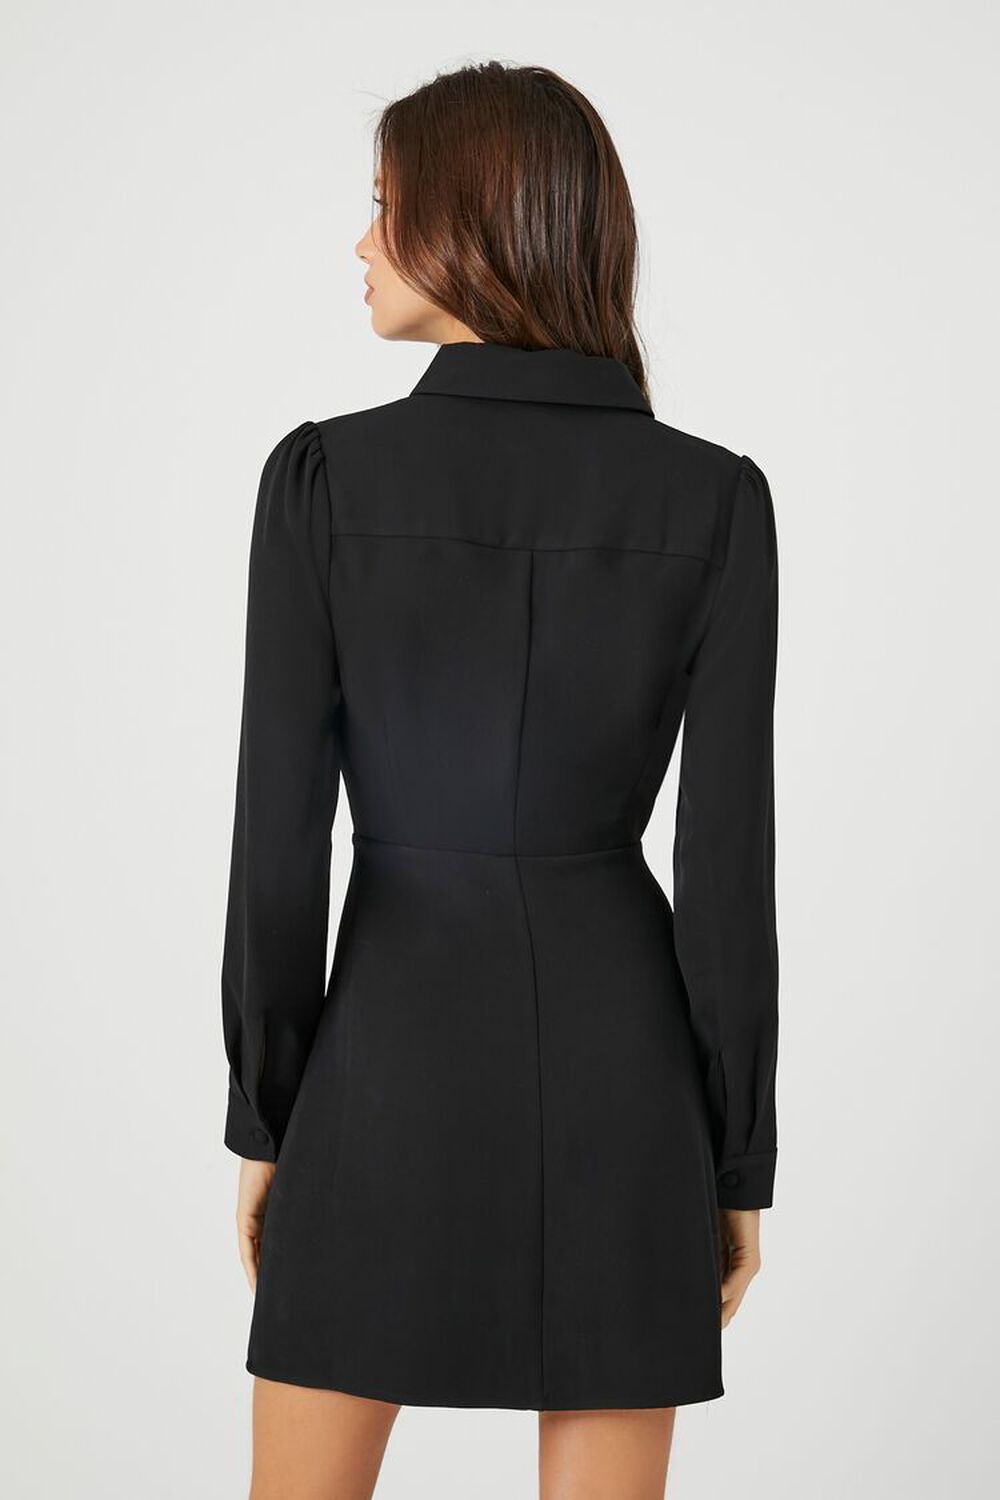 BLACK Collared Button-Front Mini Dress, image 3